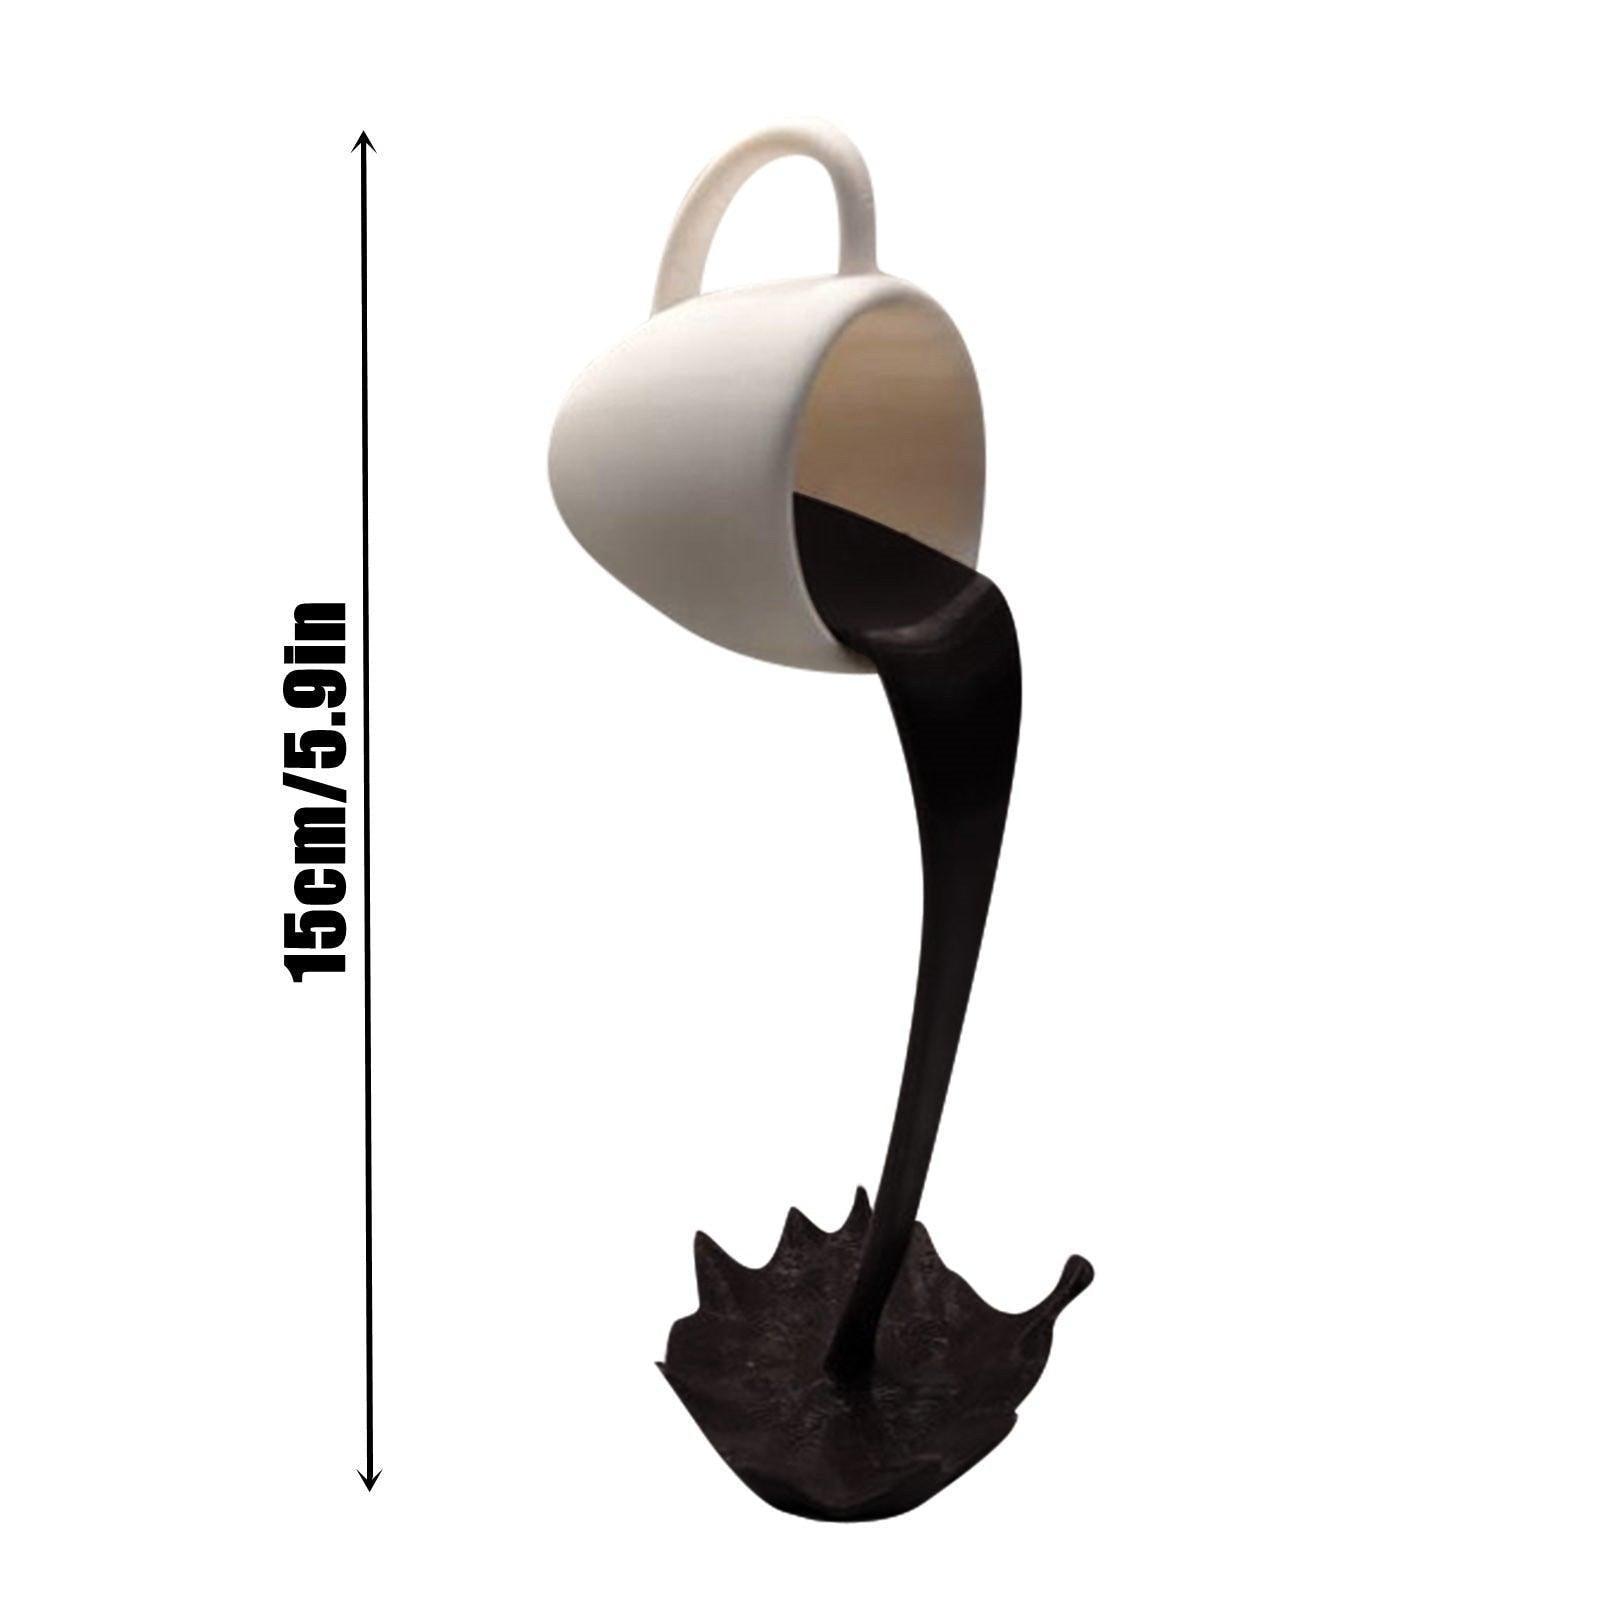  Floating Coffee Sculpture sold by Fleurlovin, Free Shipping Worldwide